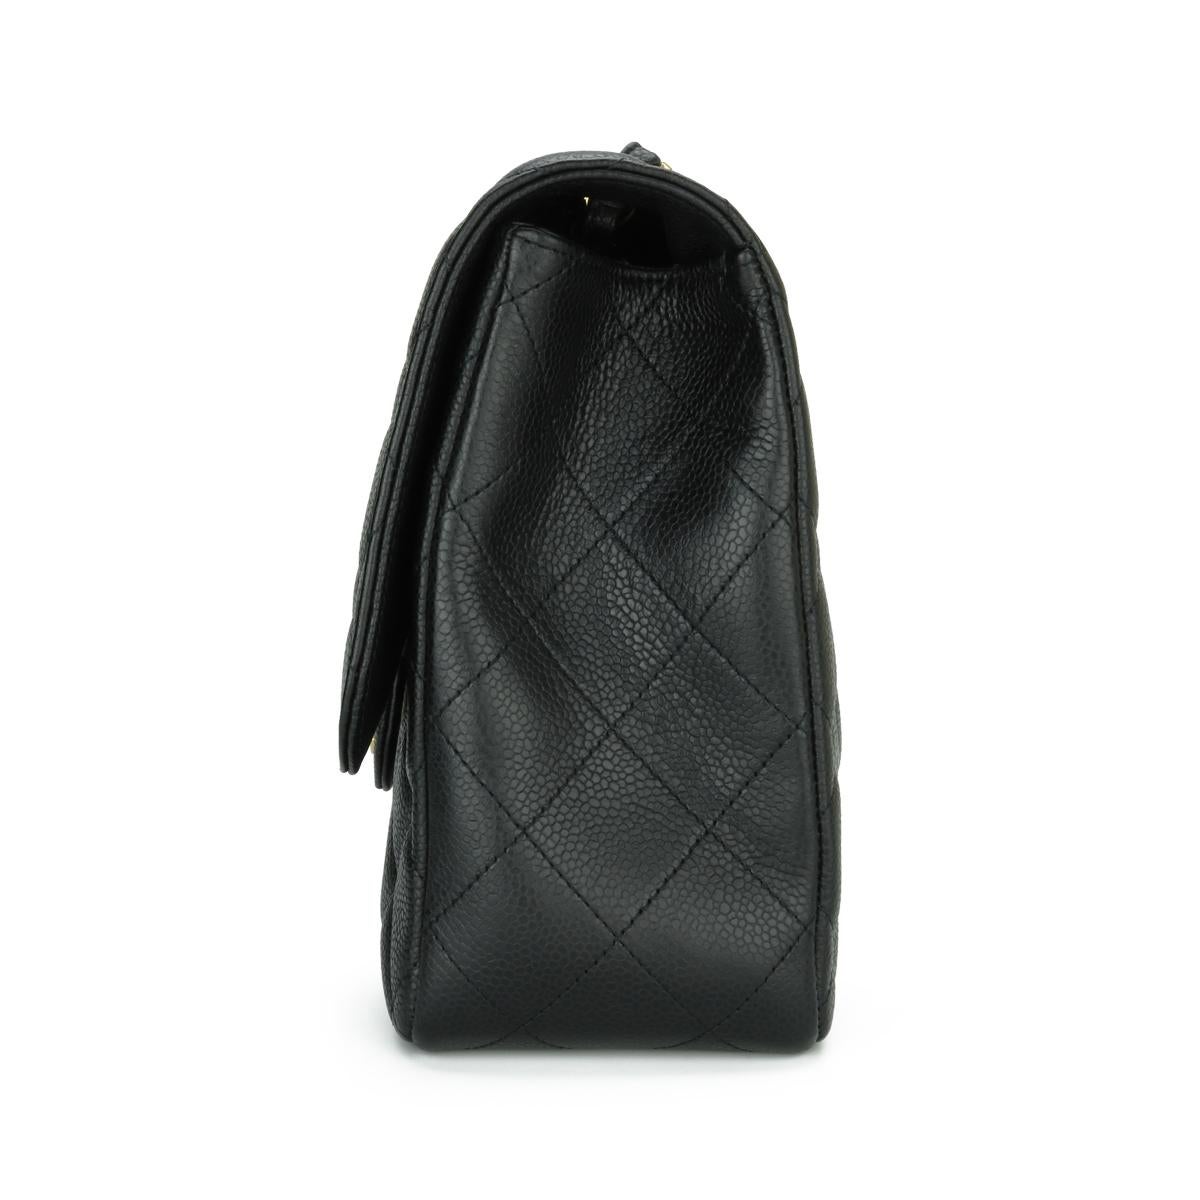 CHANEL Single Flap Jumbo Bag Black Caviar with Gold Hardware 2010 For Sale 2